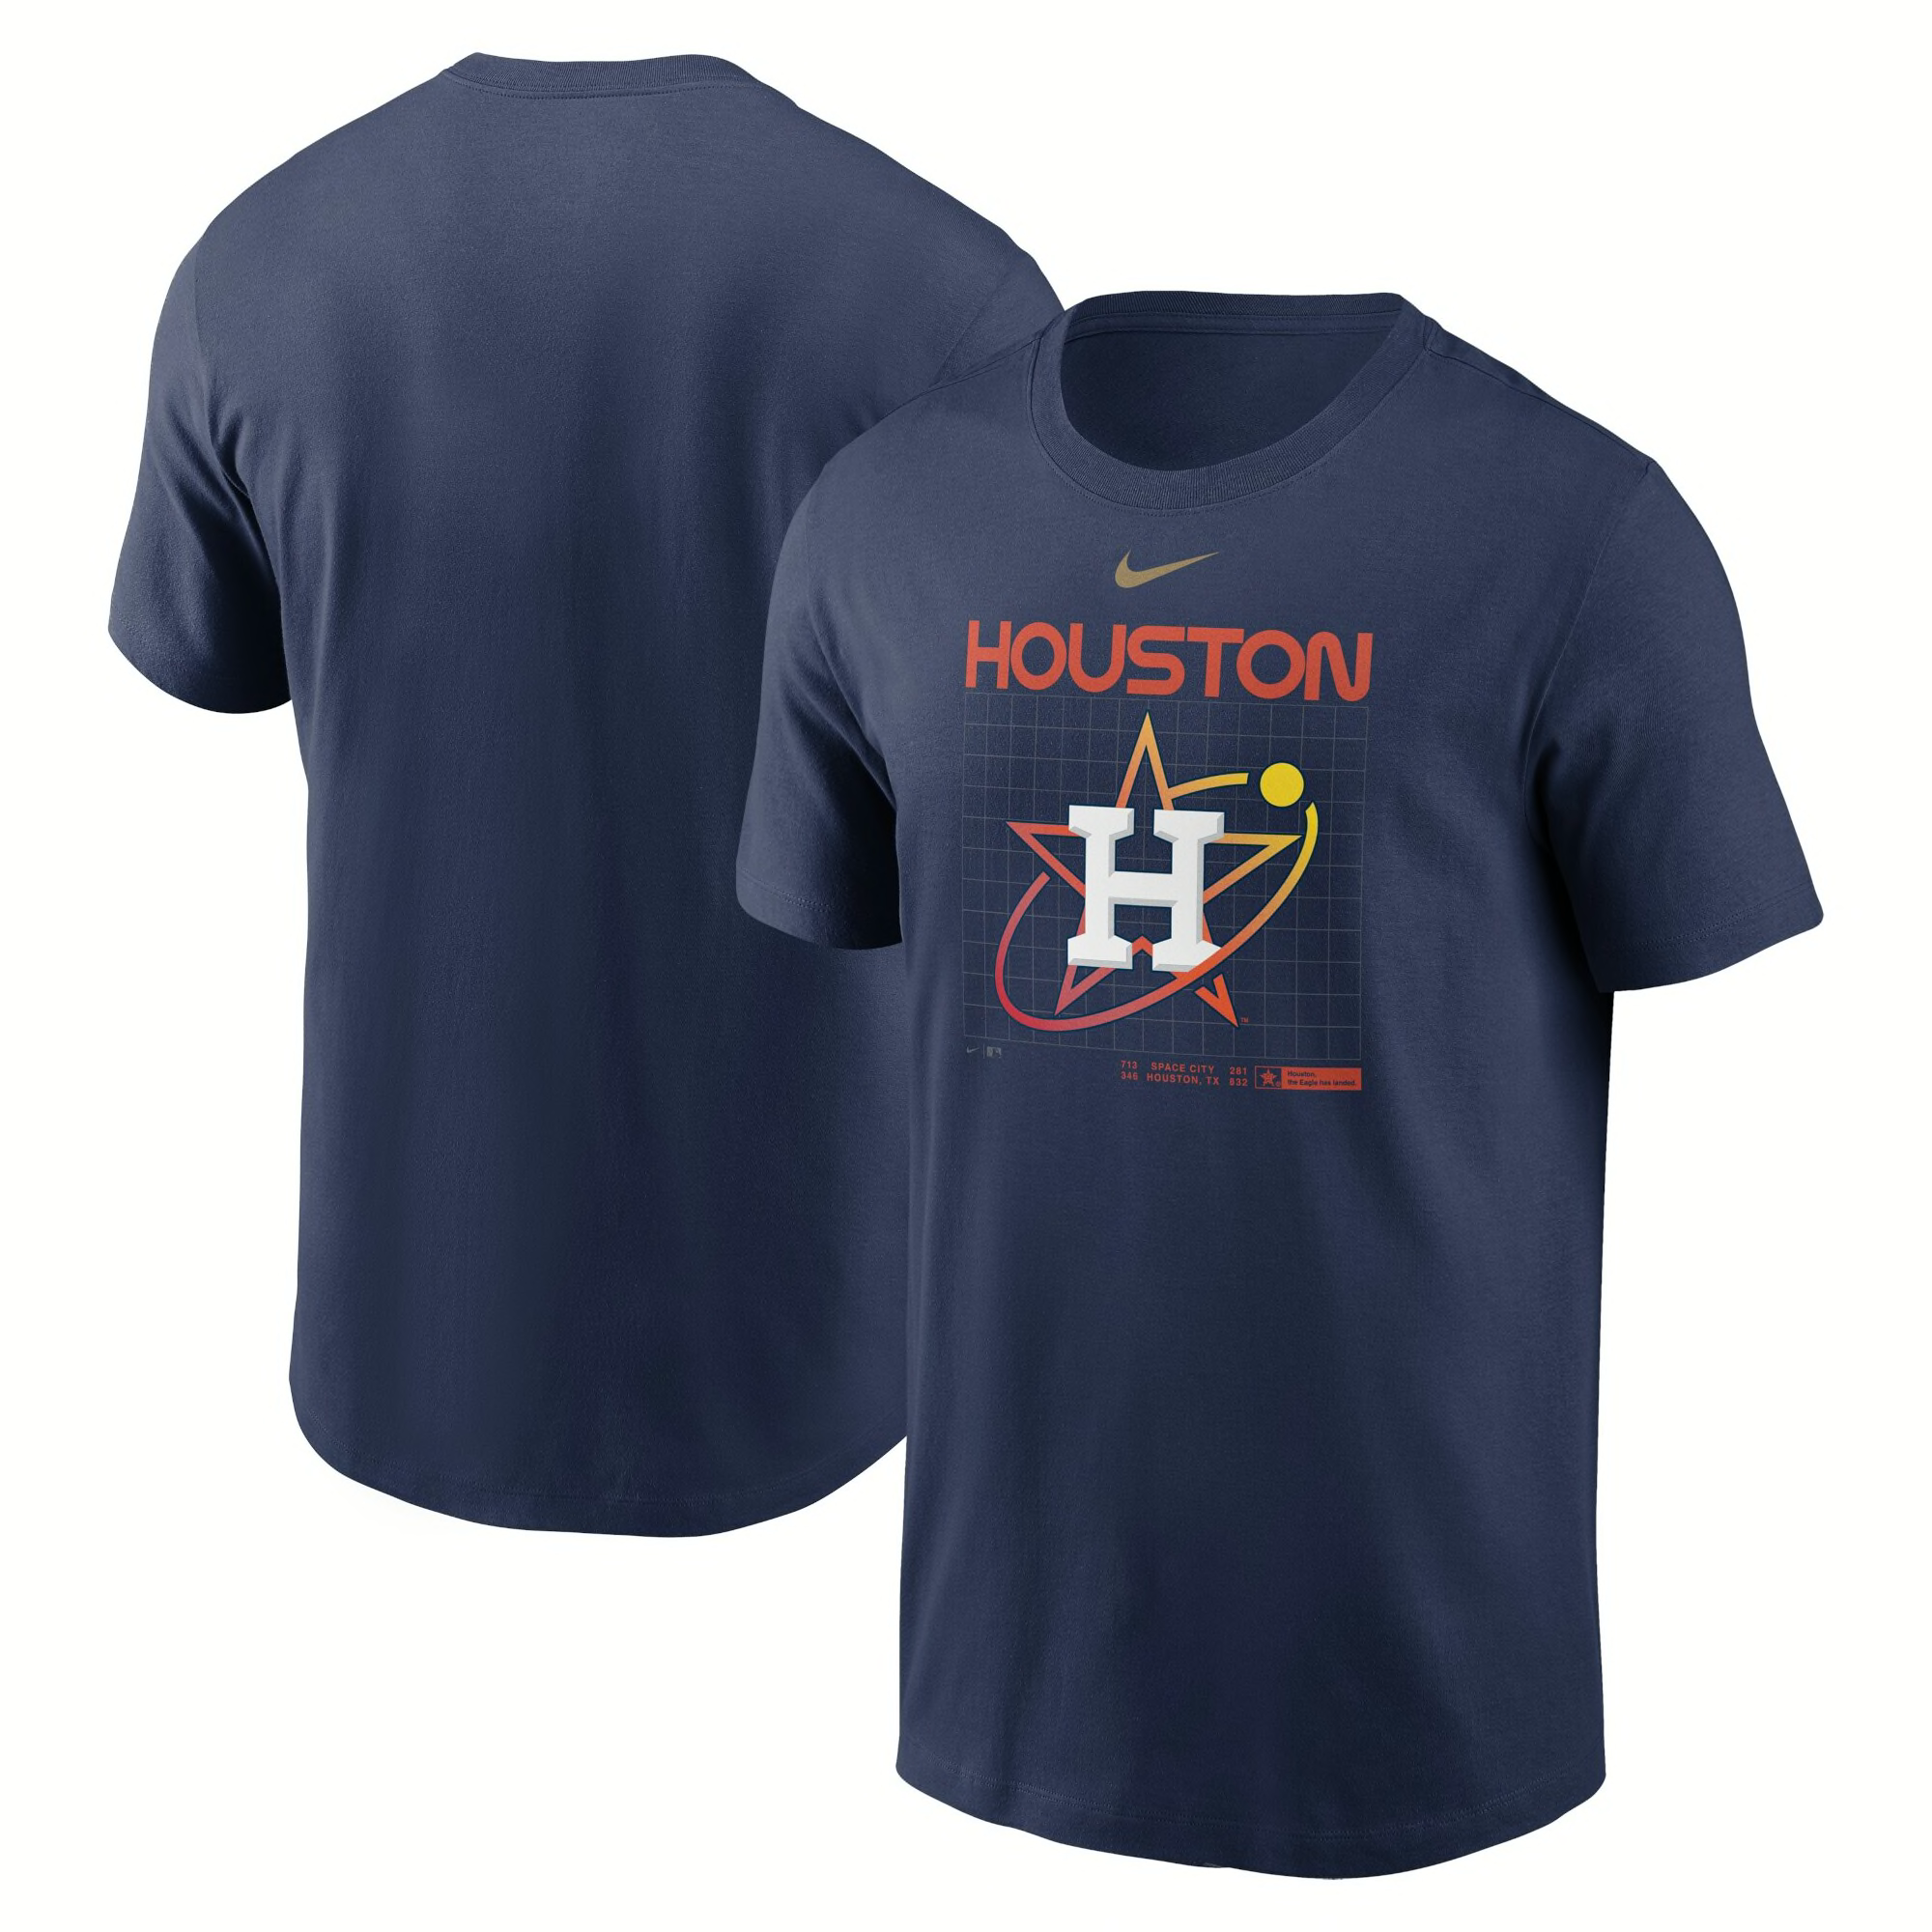 Houston Astros City Connect shirt